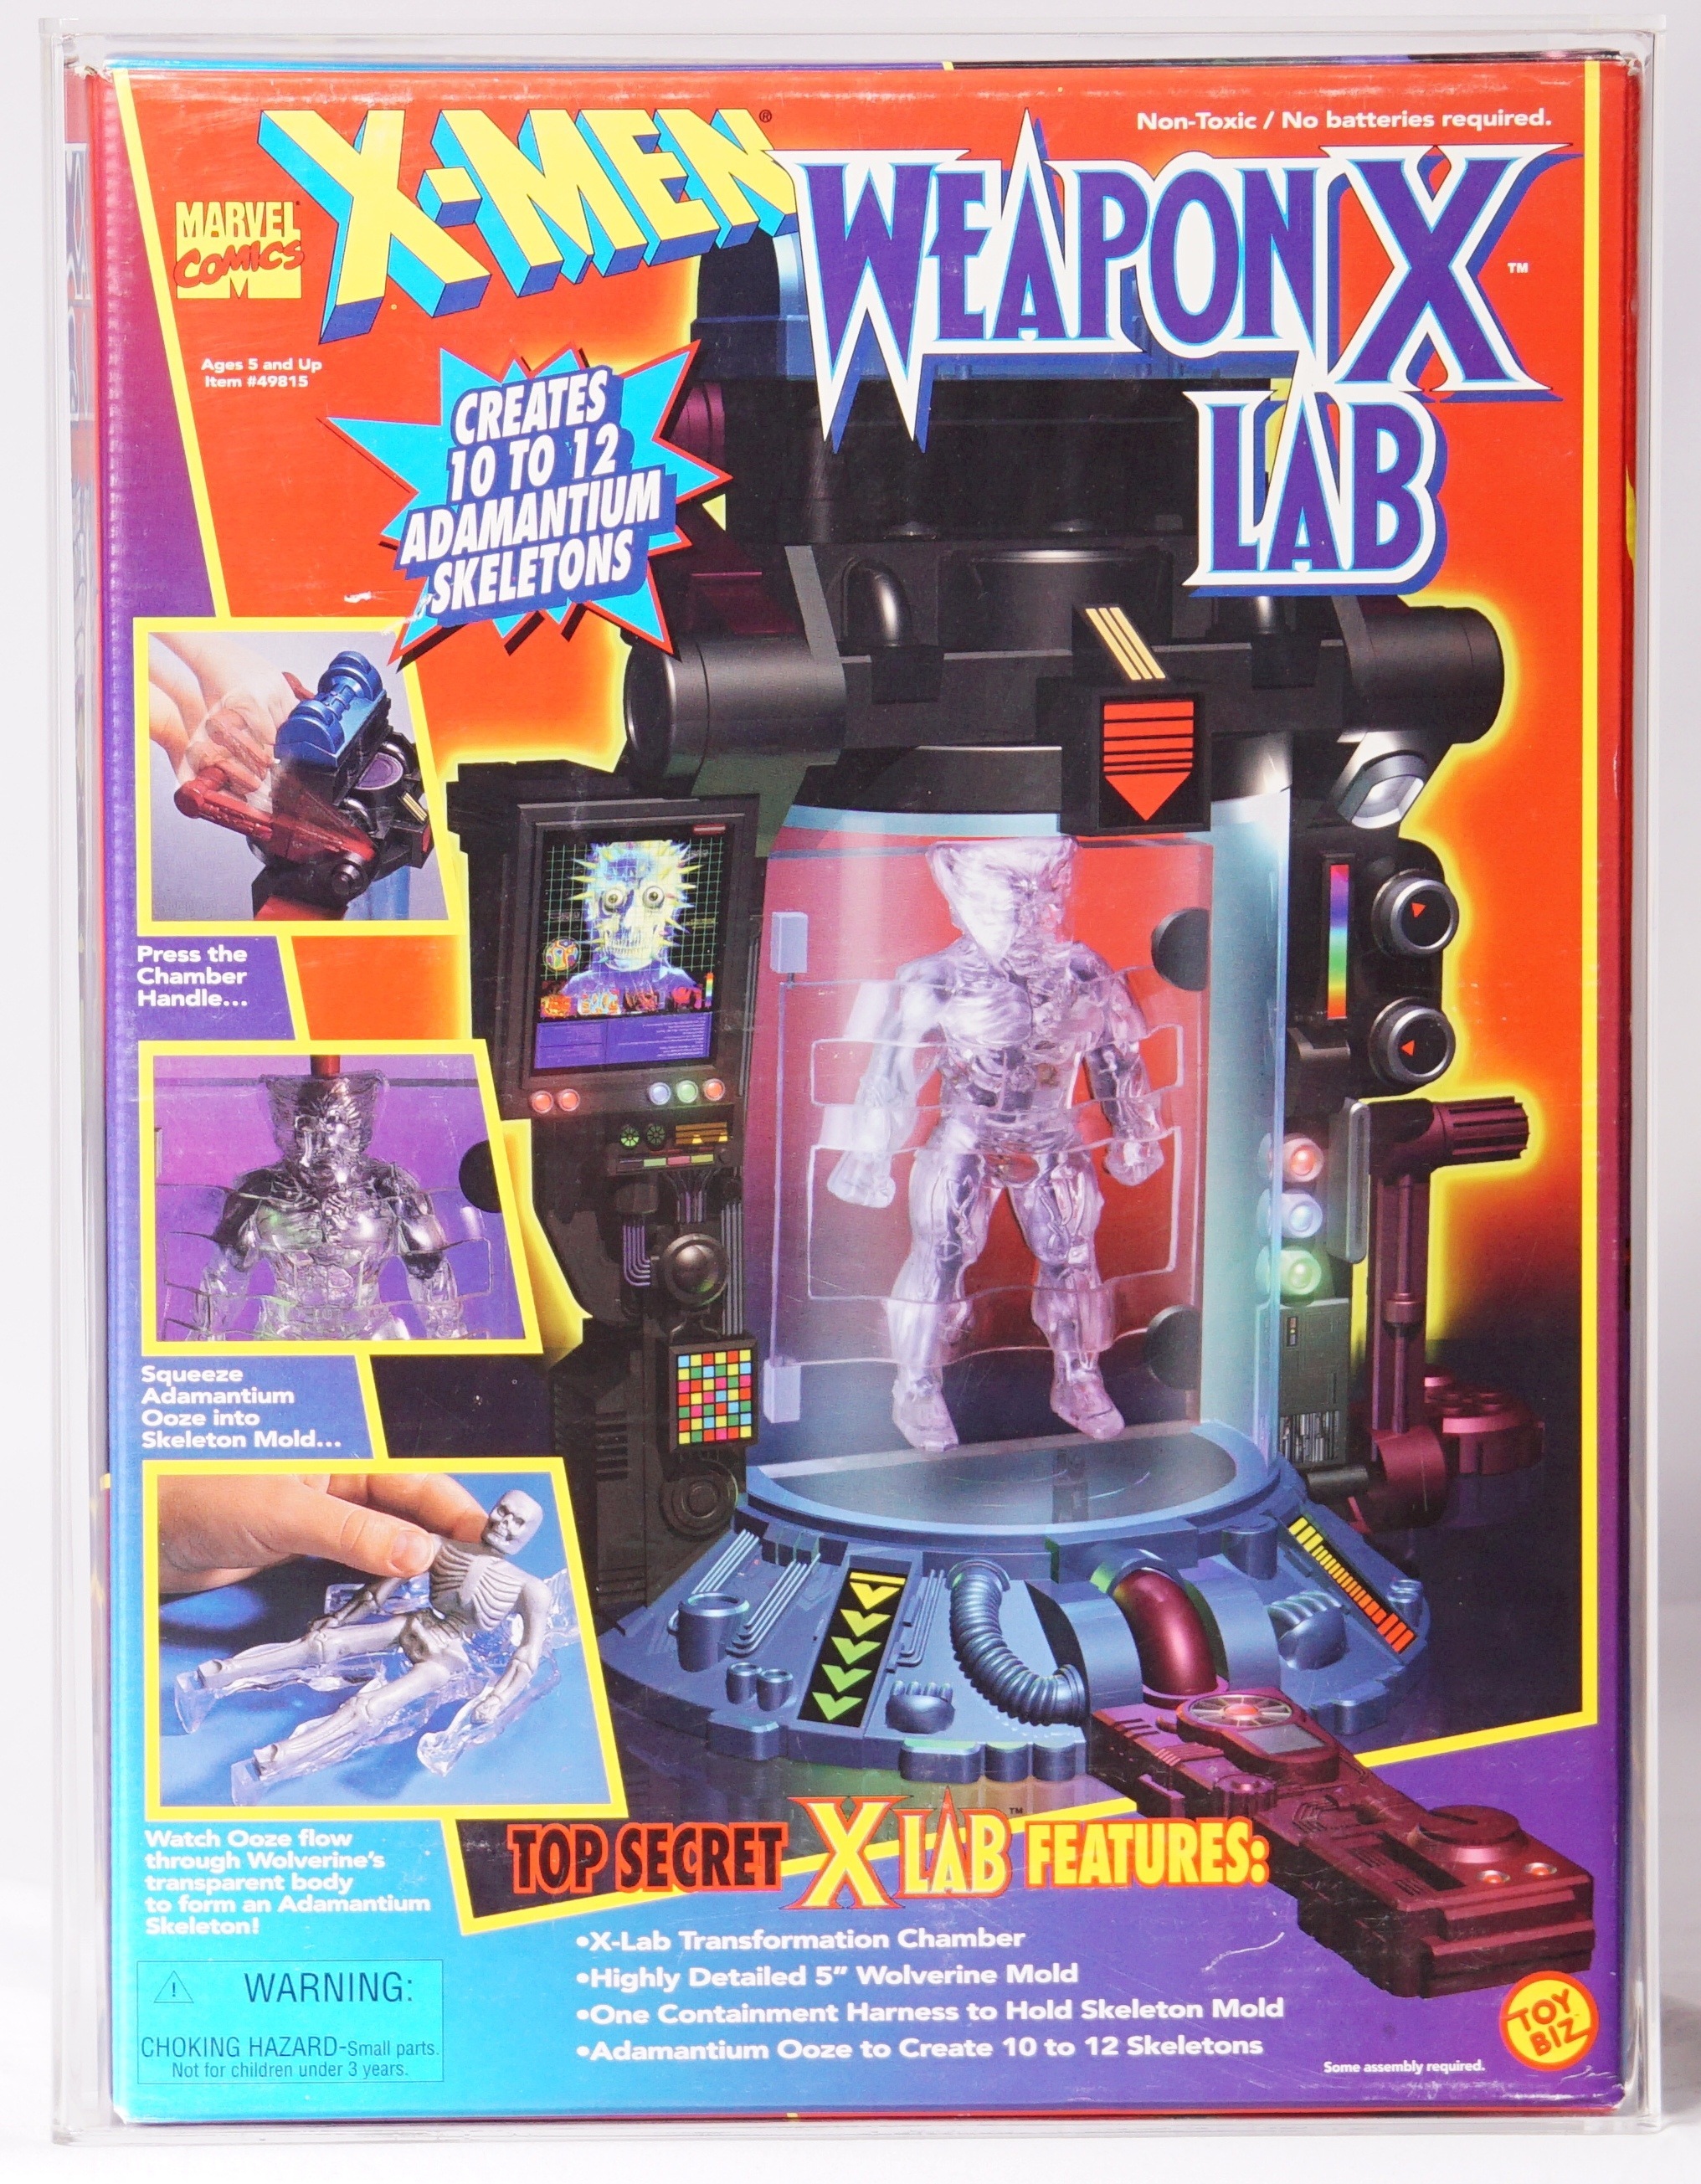 MARVEL COMICS X-MEN WEAPON X LAB